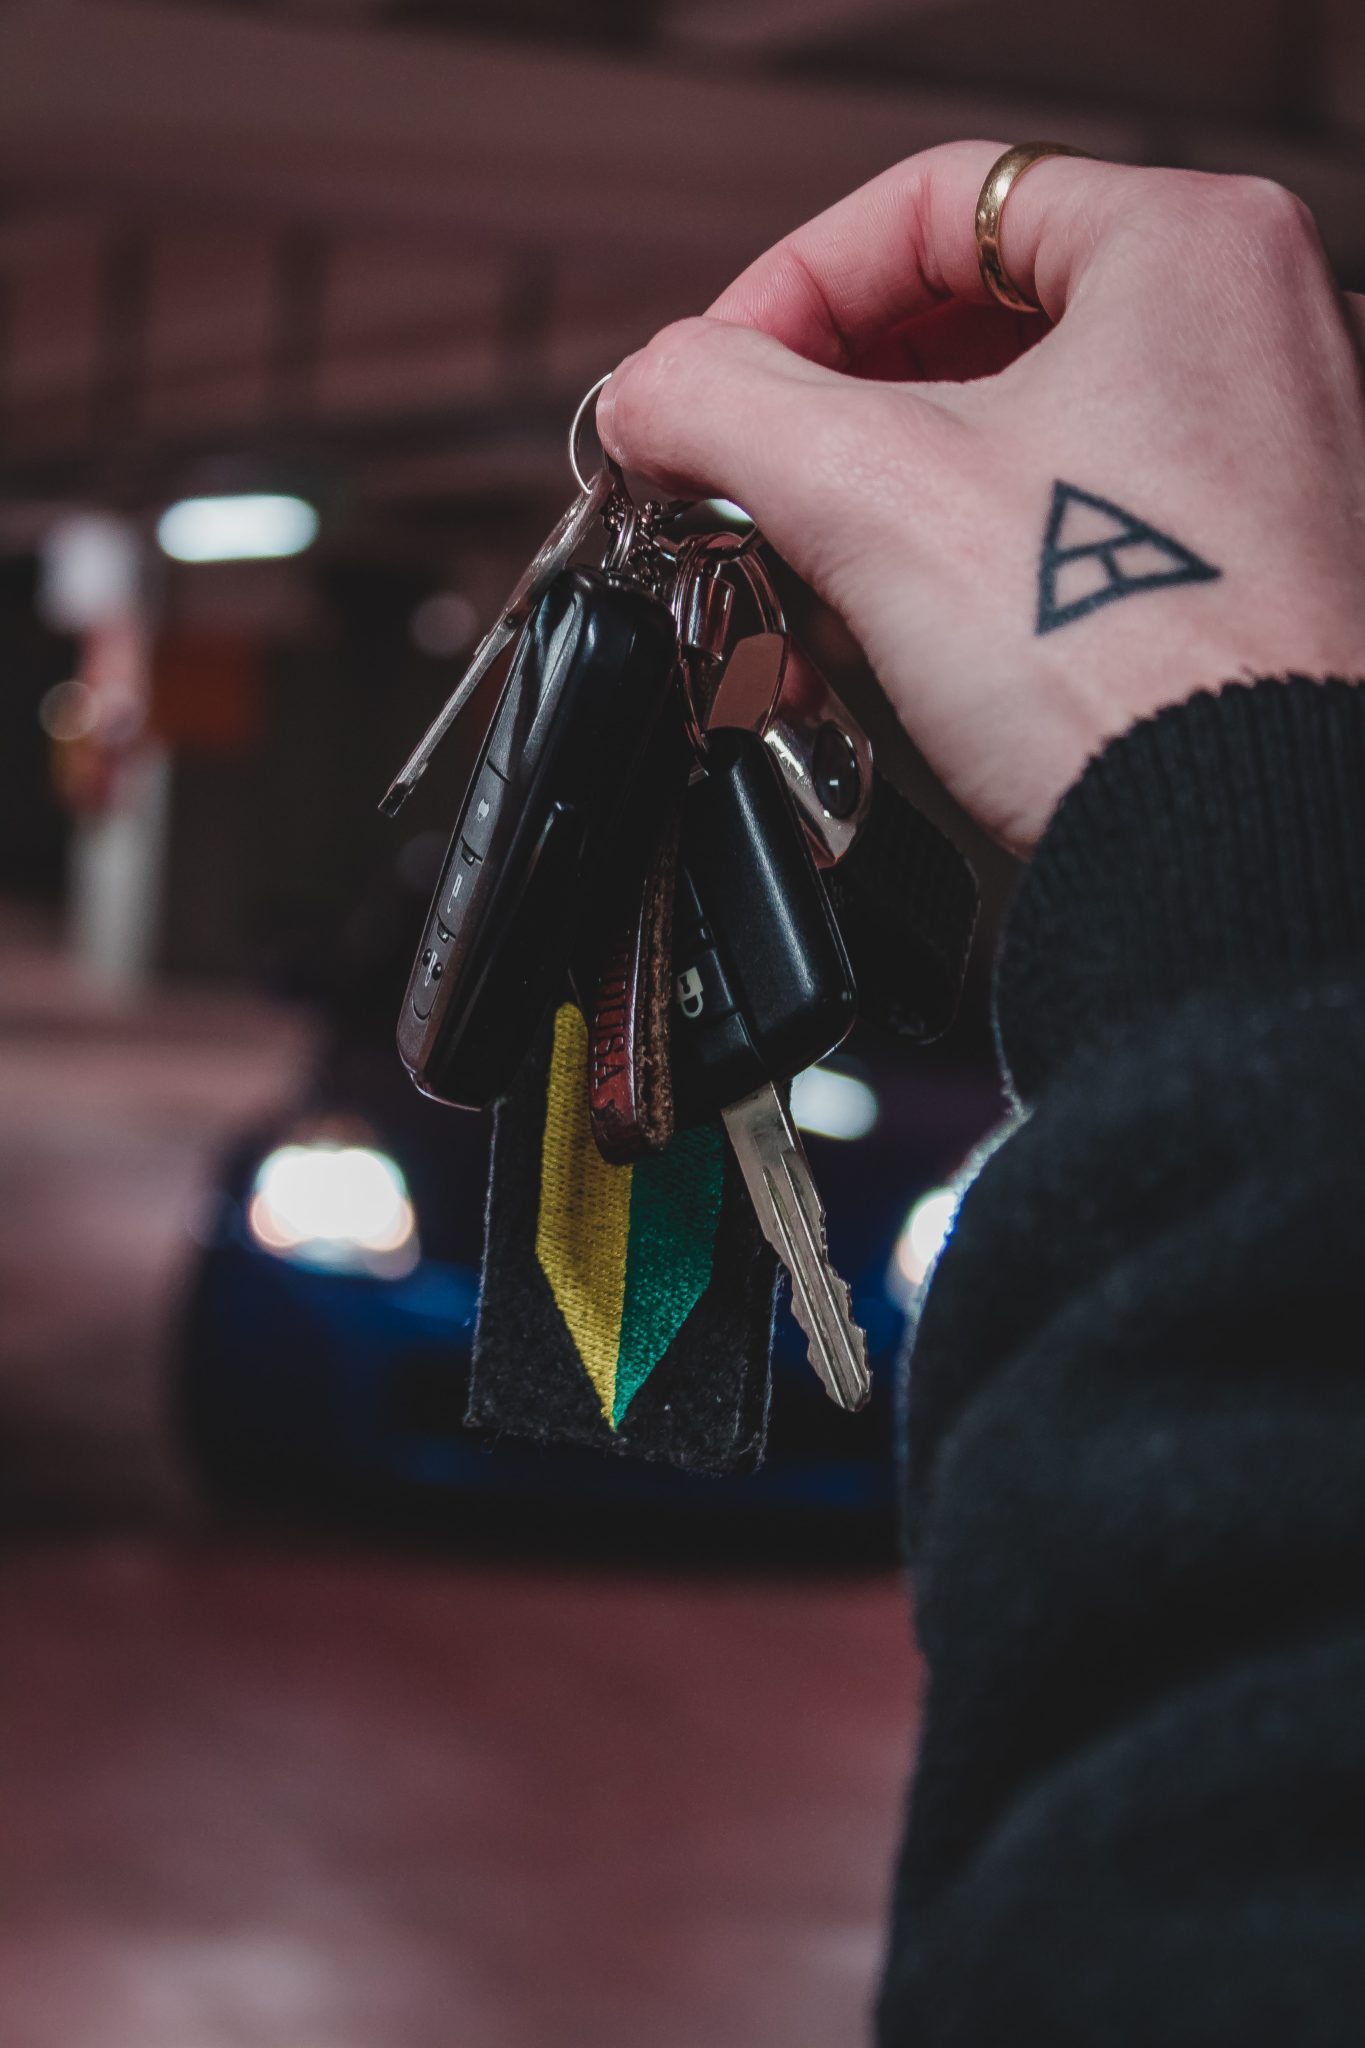 hand holding car keys